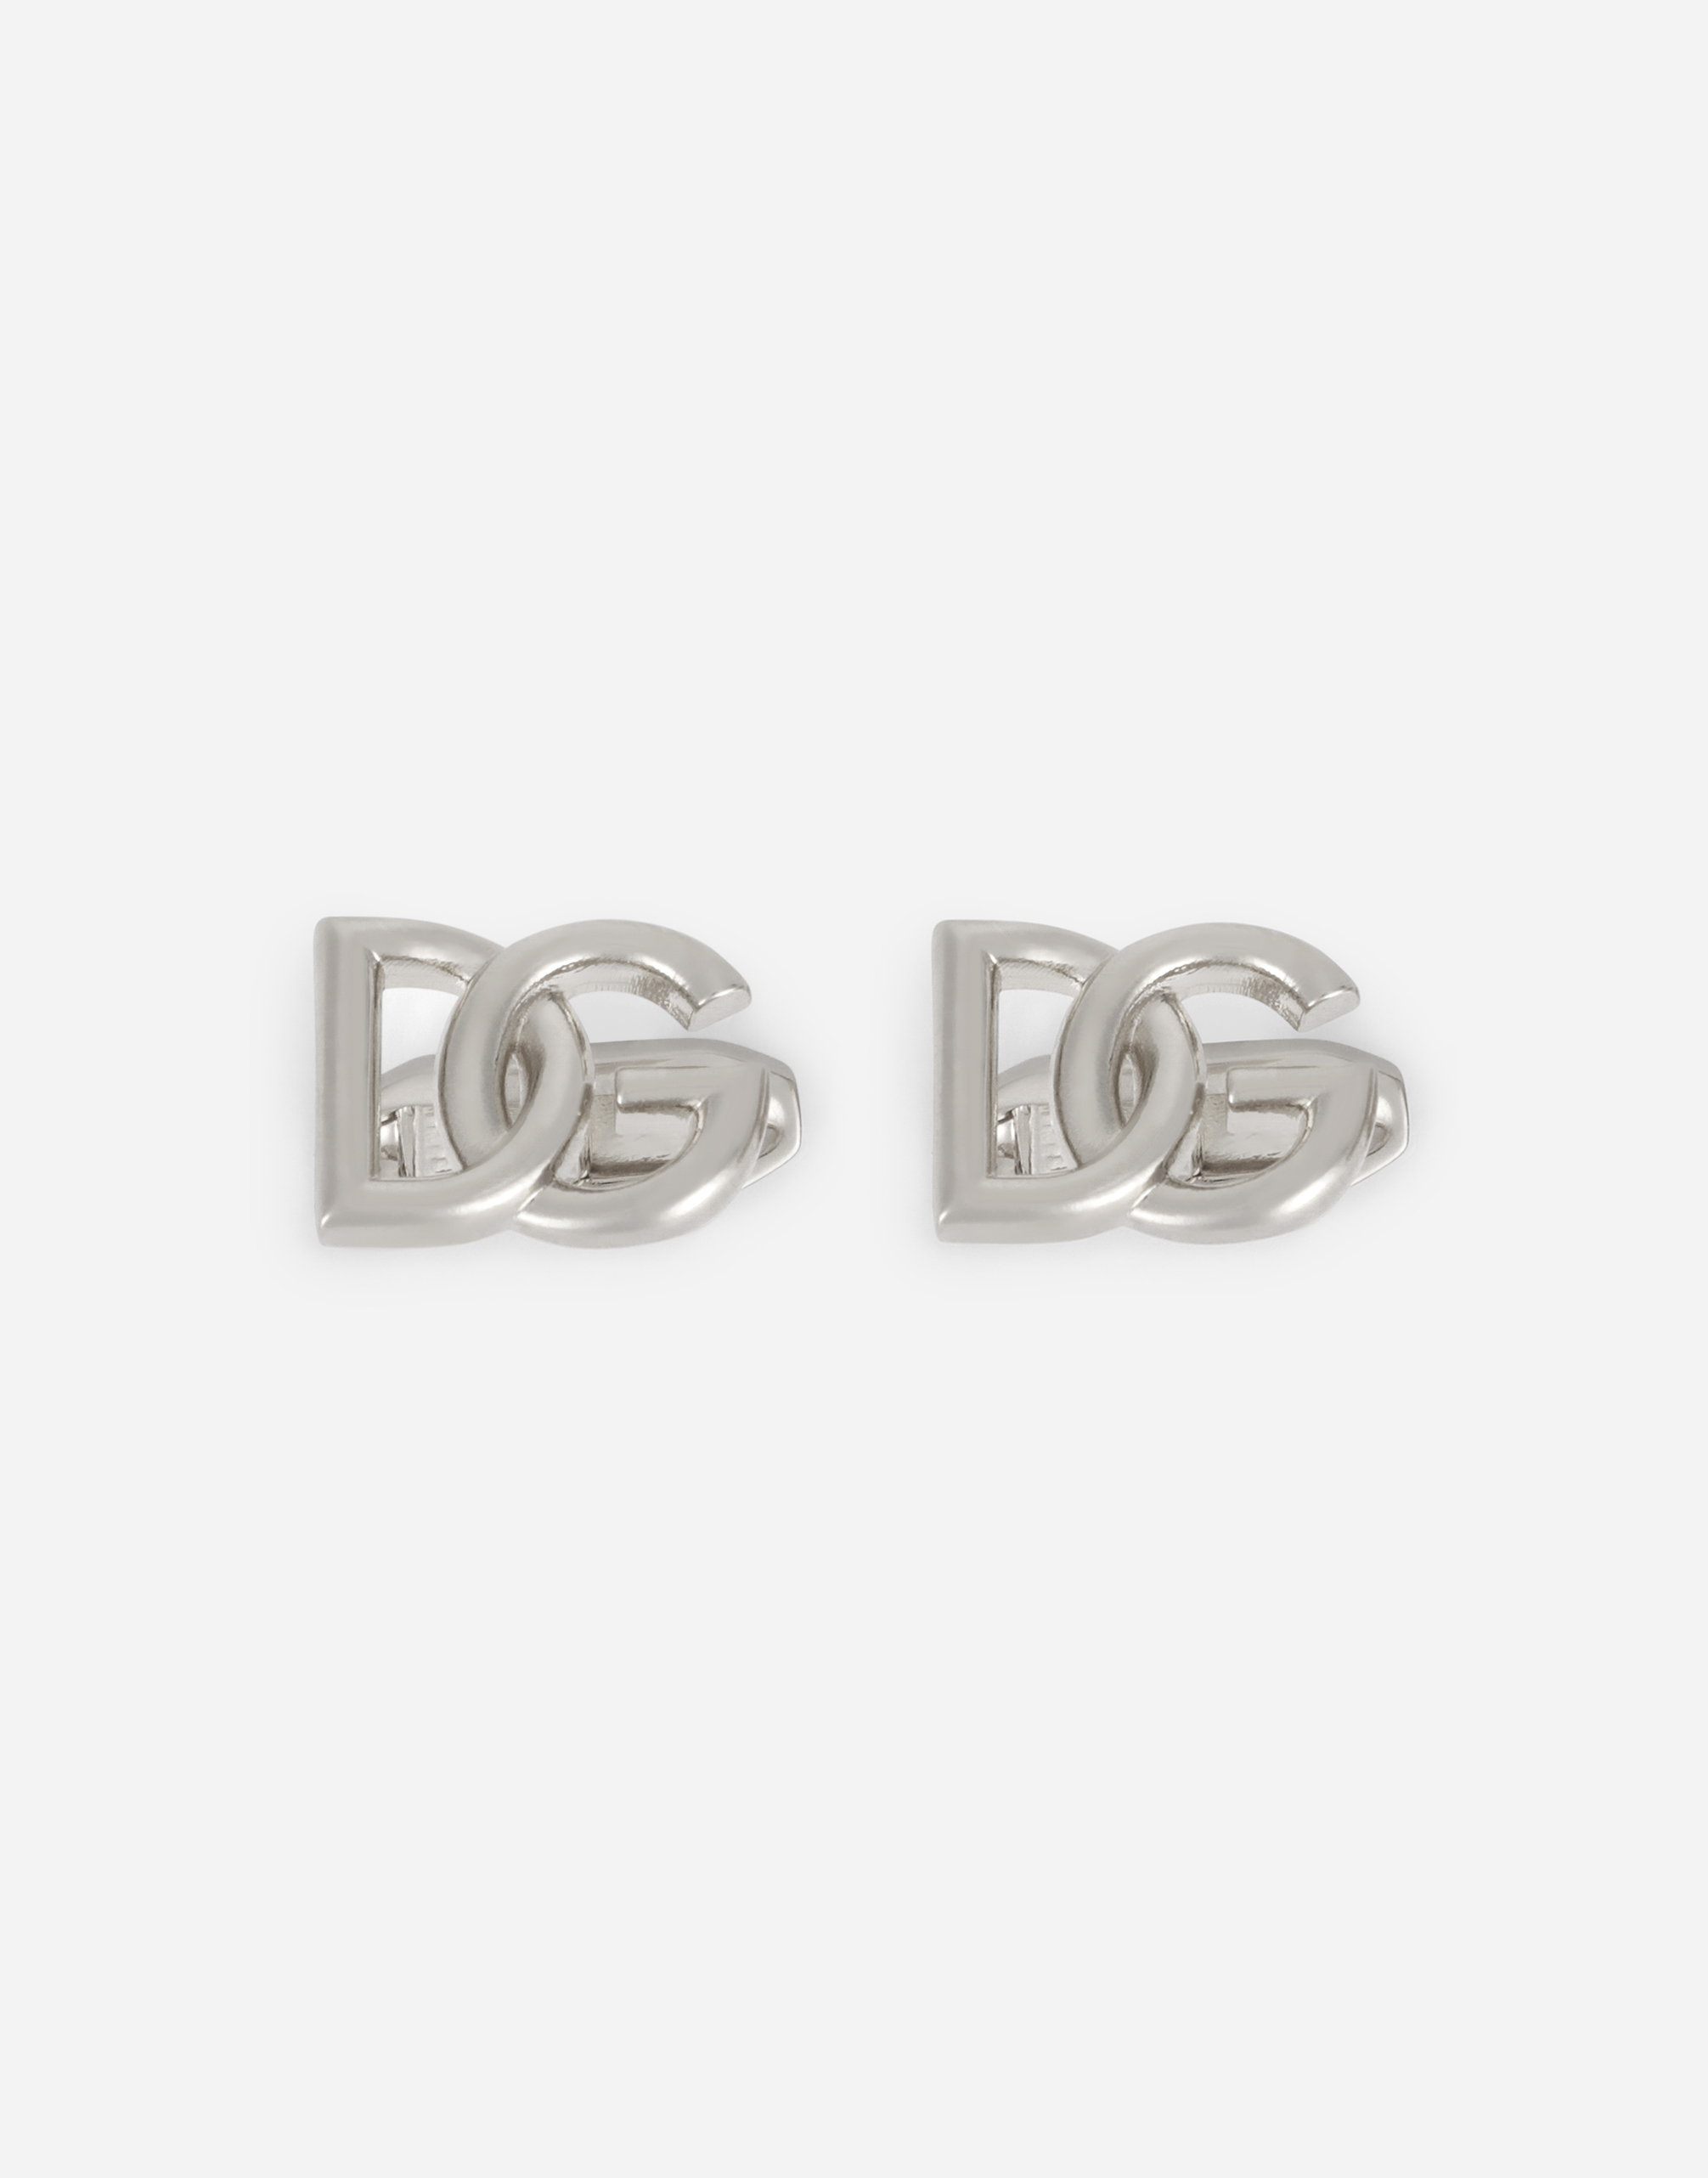 Cufflinks with DG logo in Silver